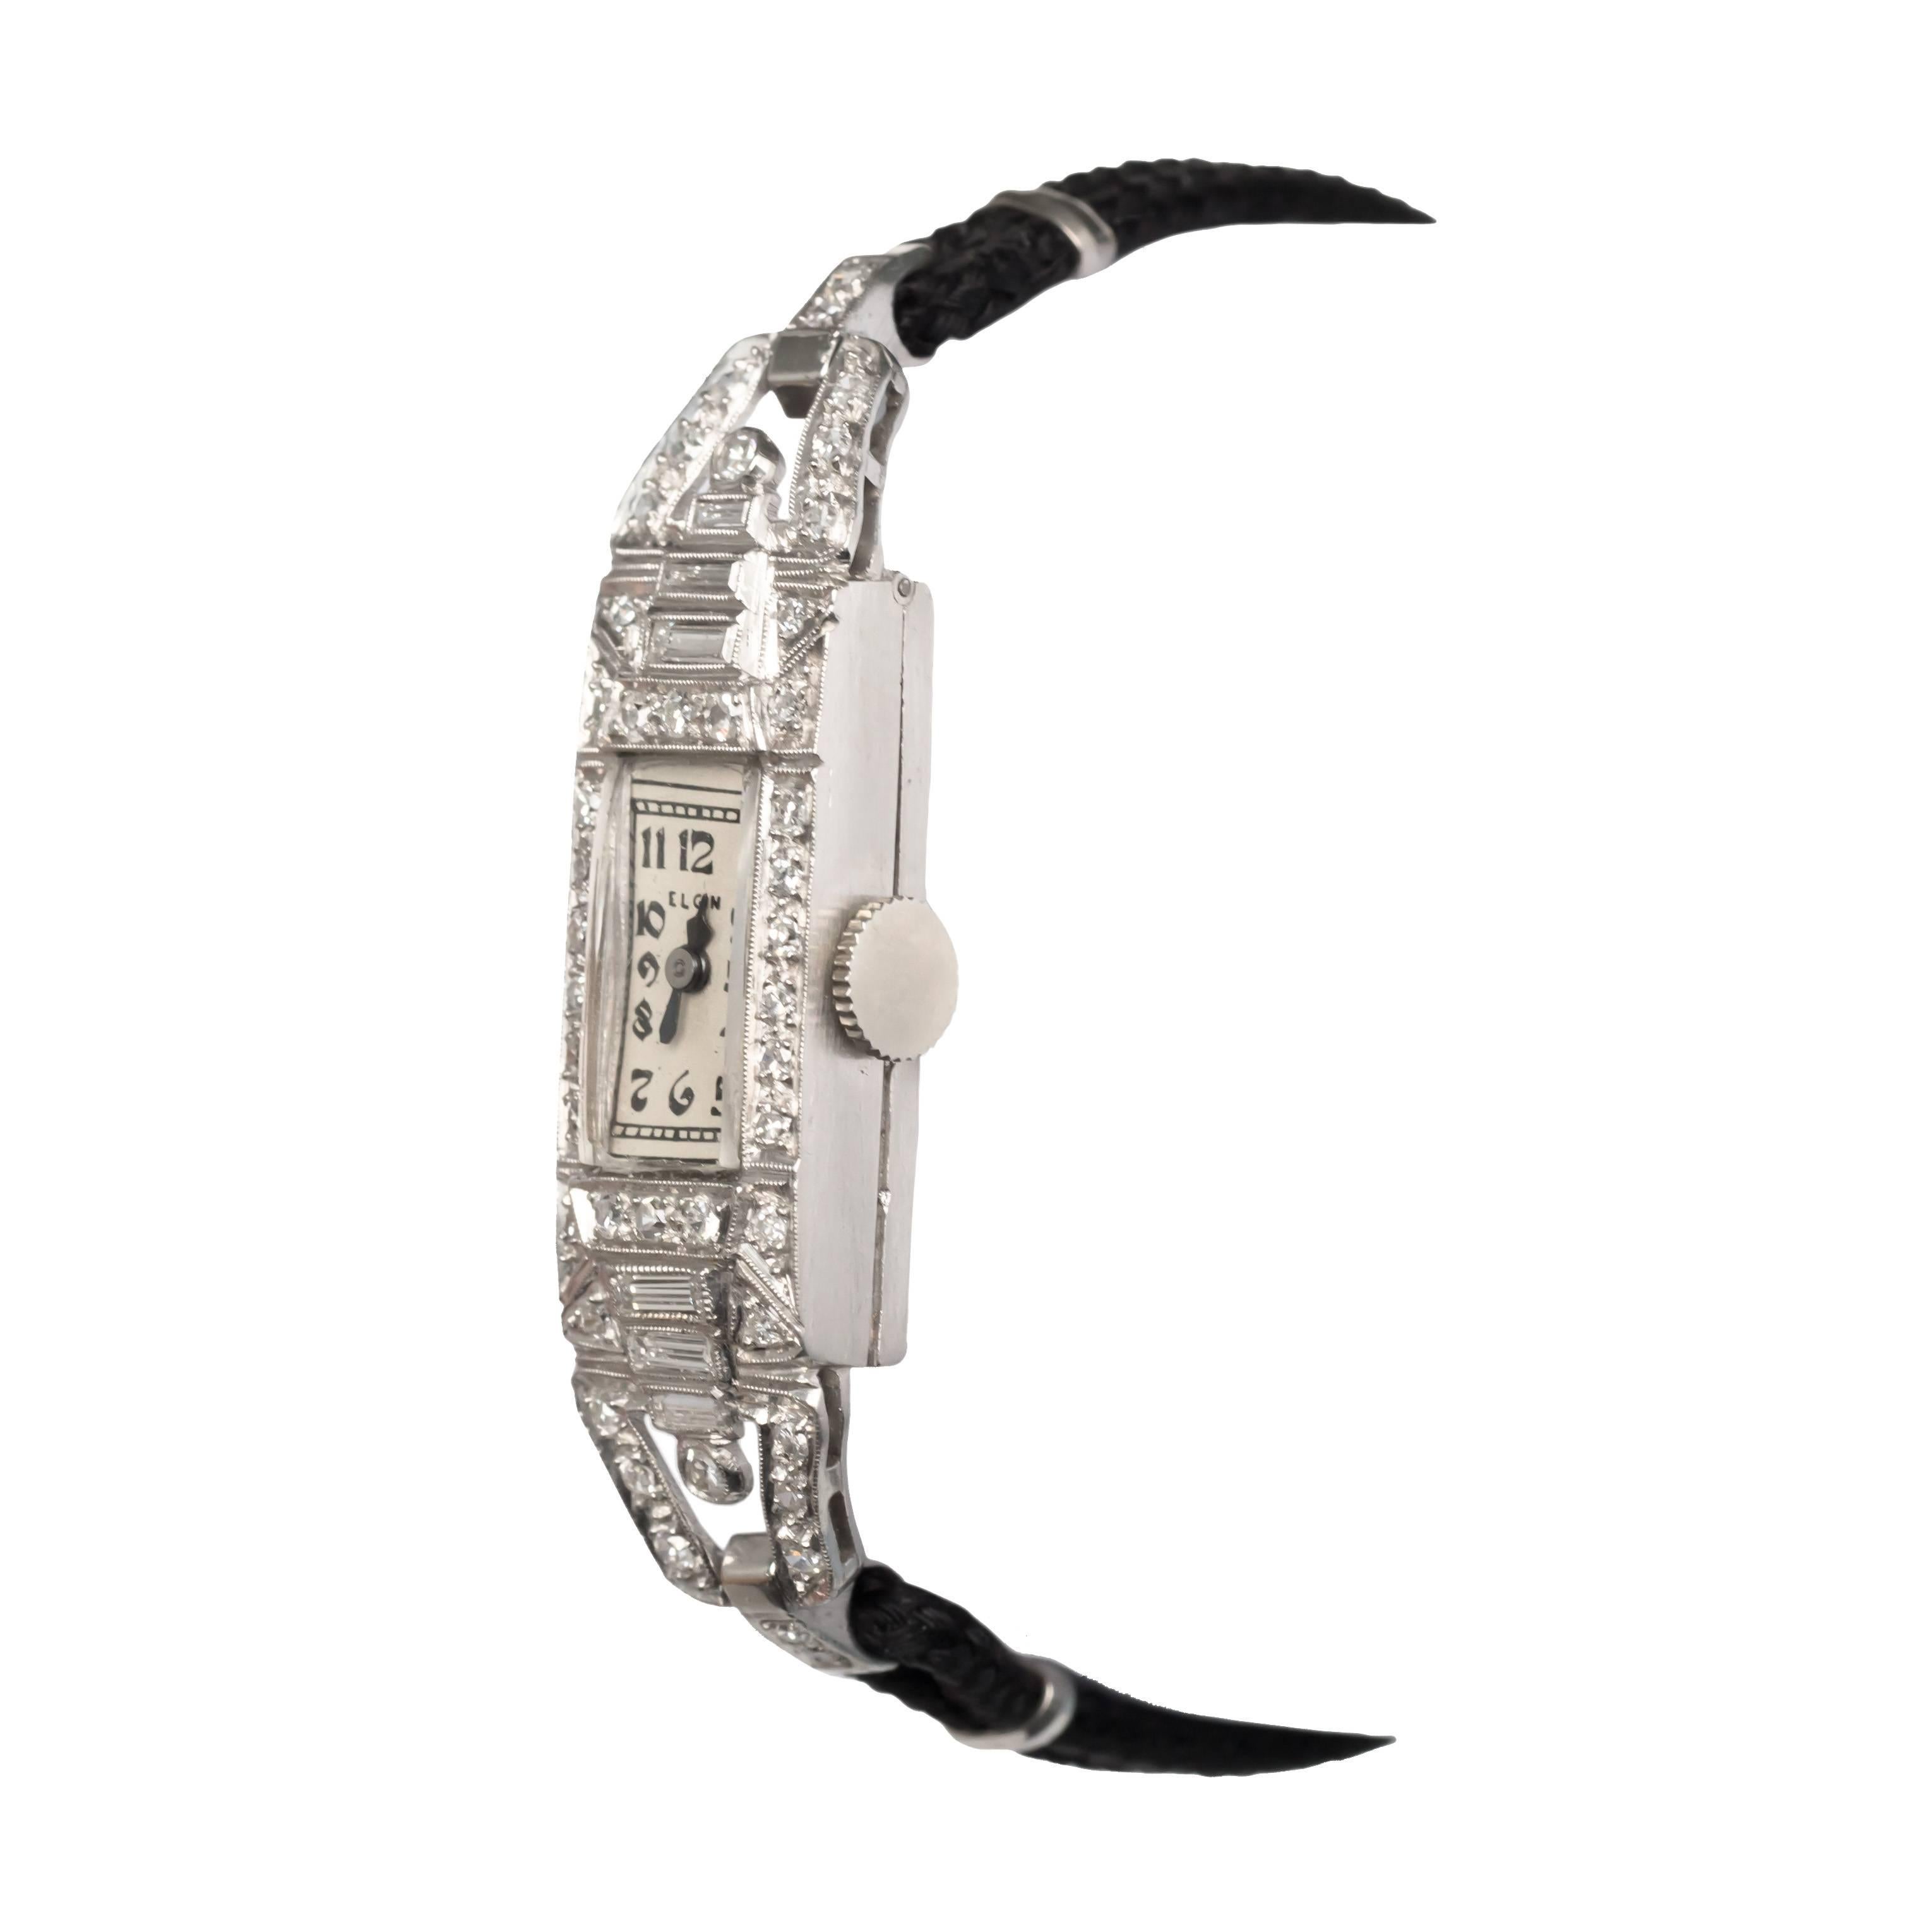 Item Details: 
Metal Type: Platinum
Weight: 12.4 grams

Diamond Details:
Shape: Antique Single Cut, Antique Baguette Cut
Carat Weight: .60 carat, total weight
Color: F
Clarity: VS1

Length of watch: 6.25 inches